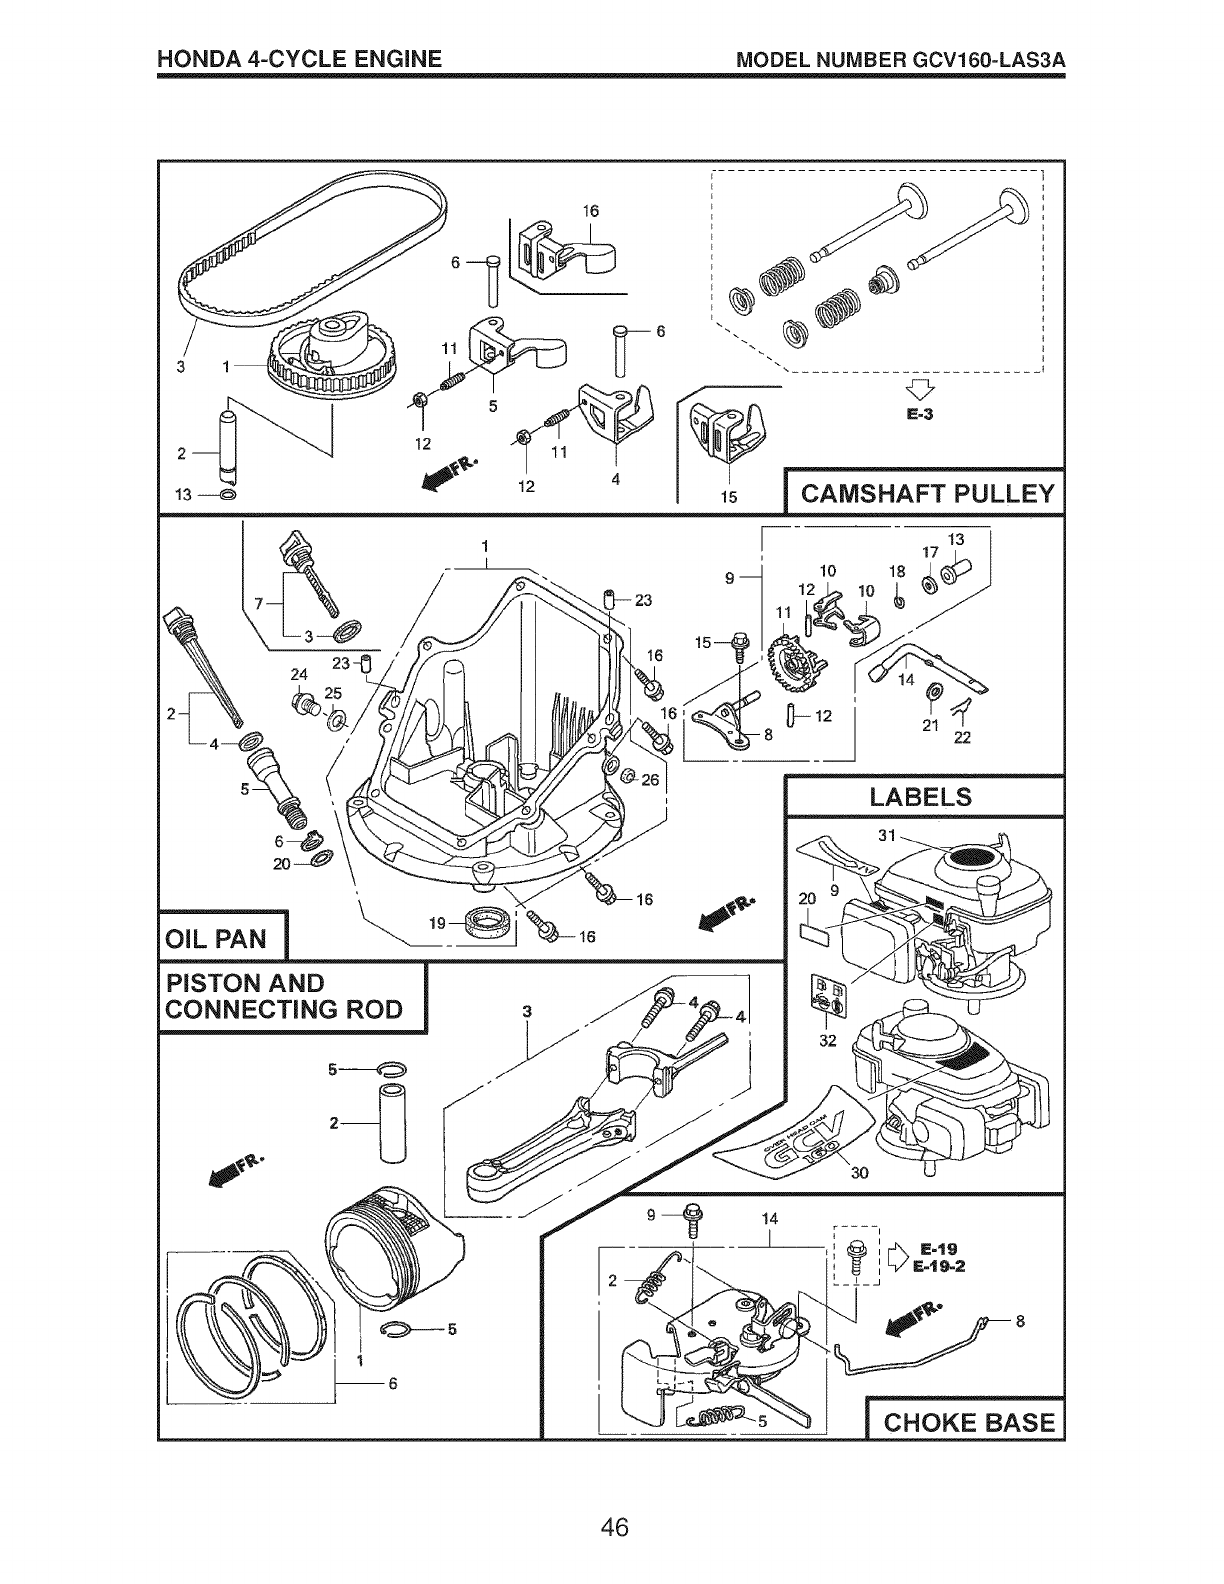 Craftsman lawn mower honda engine manual